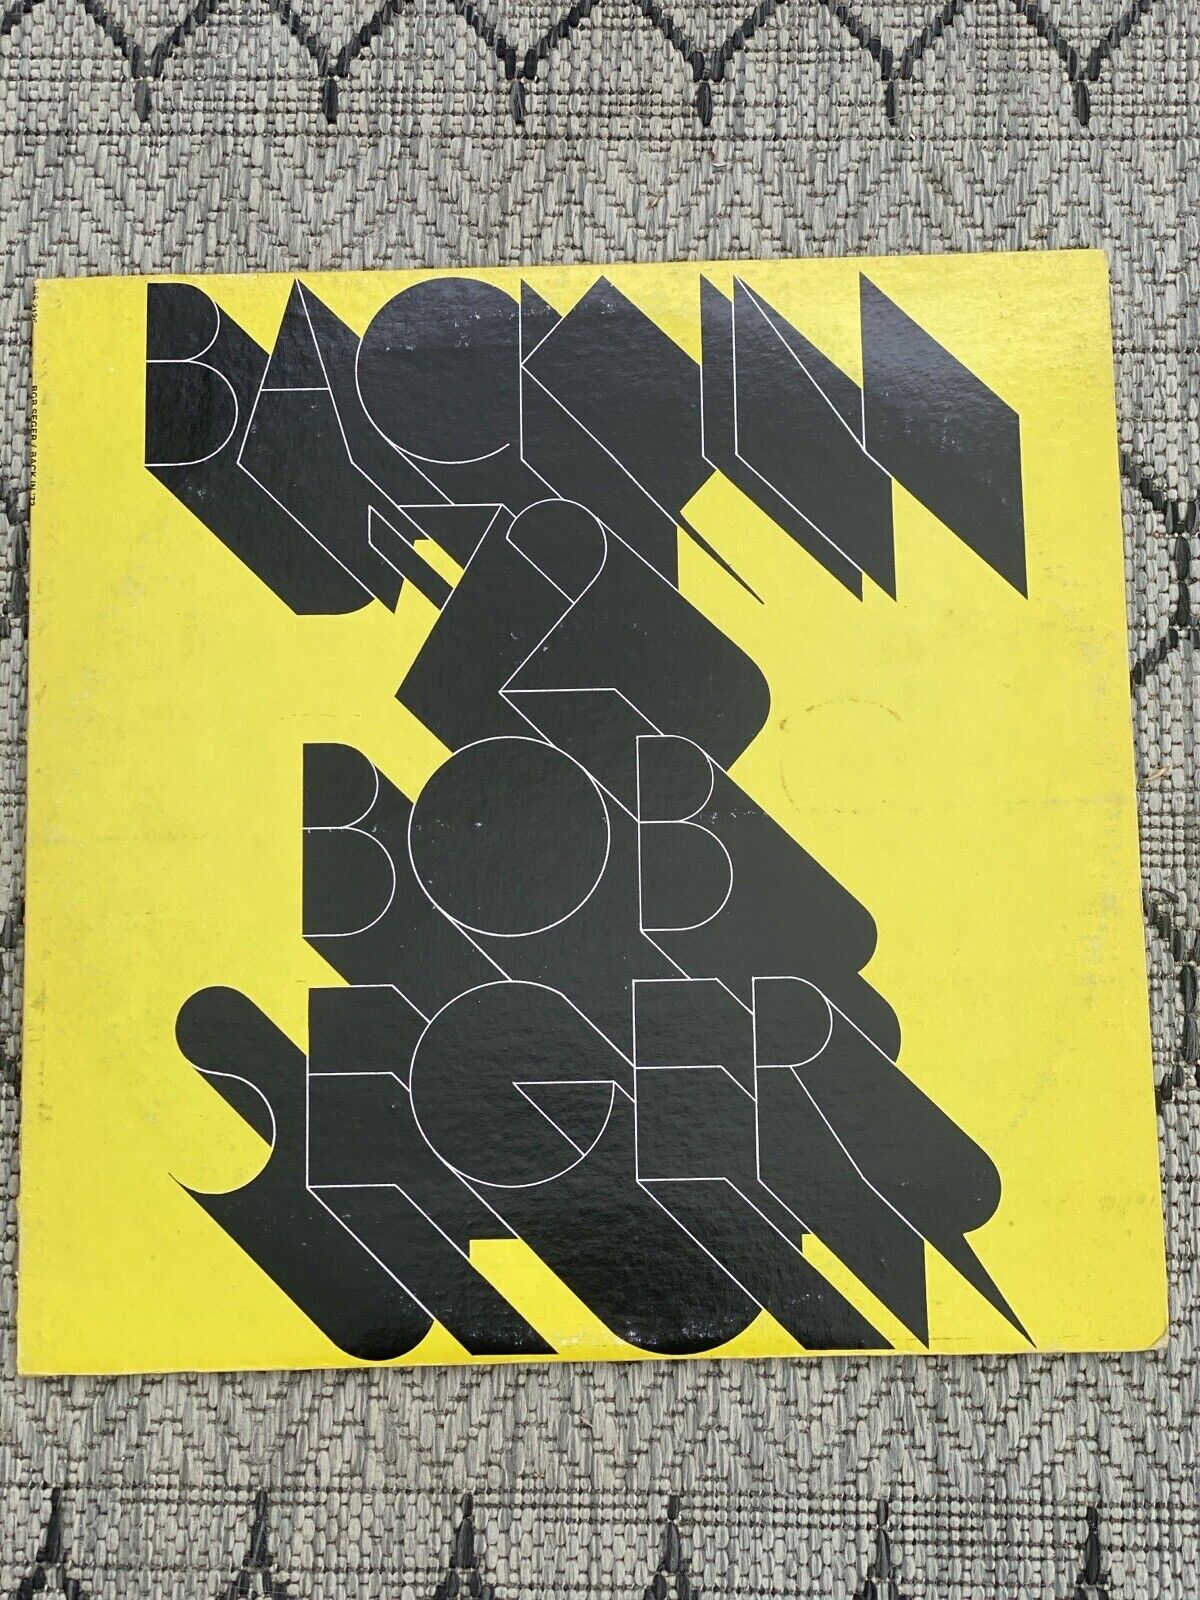 Back In 72 LP Bob Seger US Pressing Good Condition 1973 Blue Label